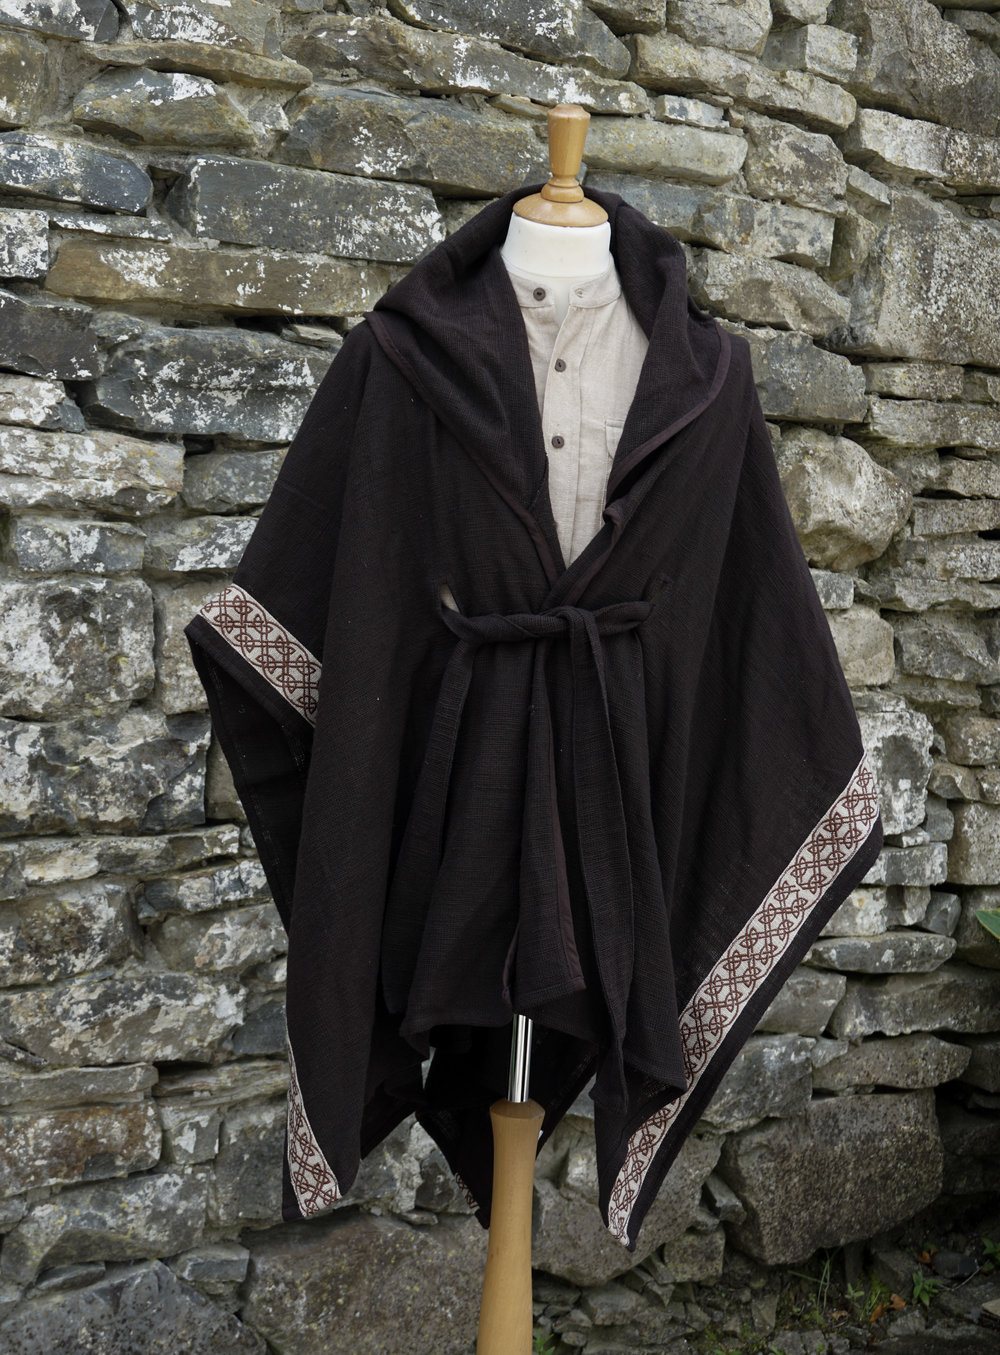 Viking Cloak - Women's Hooded Cotton Cloak - Viking Warrior